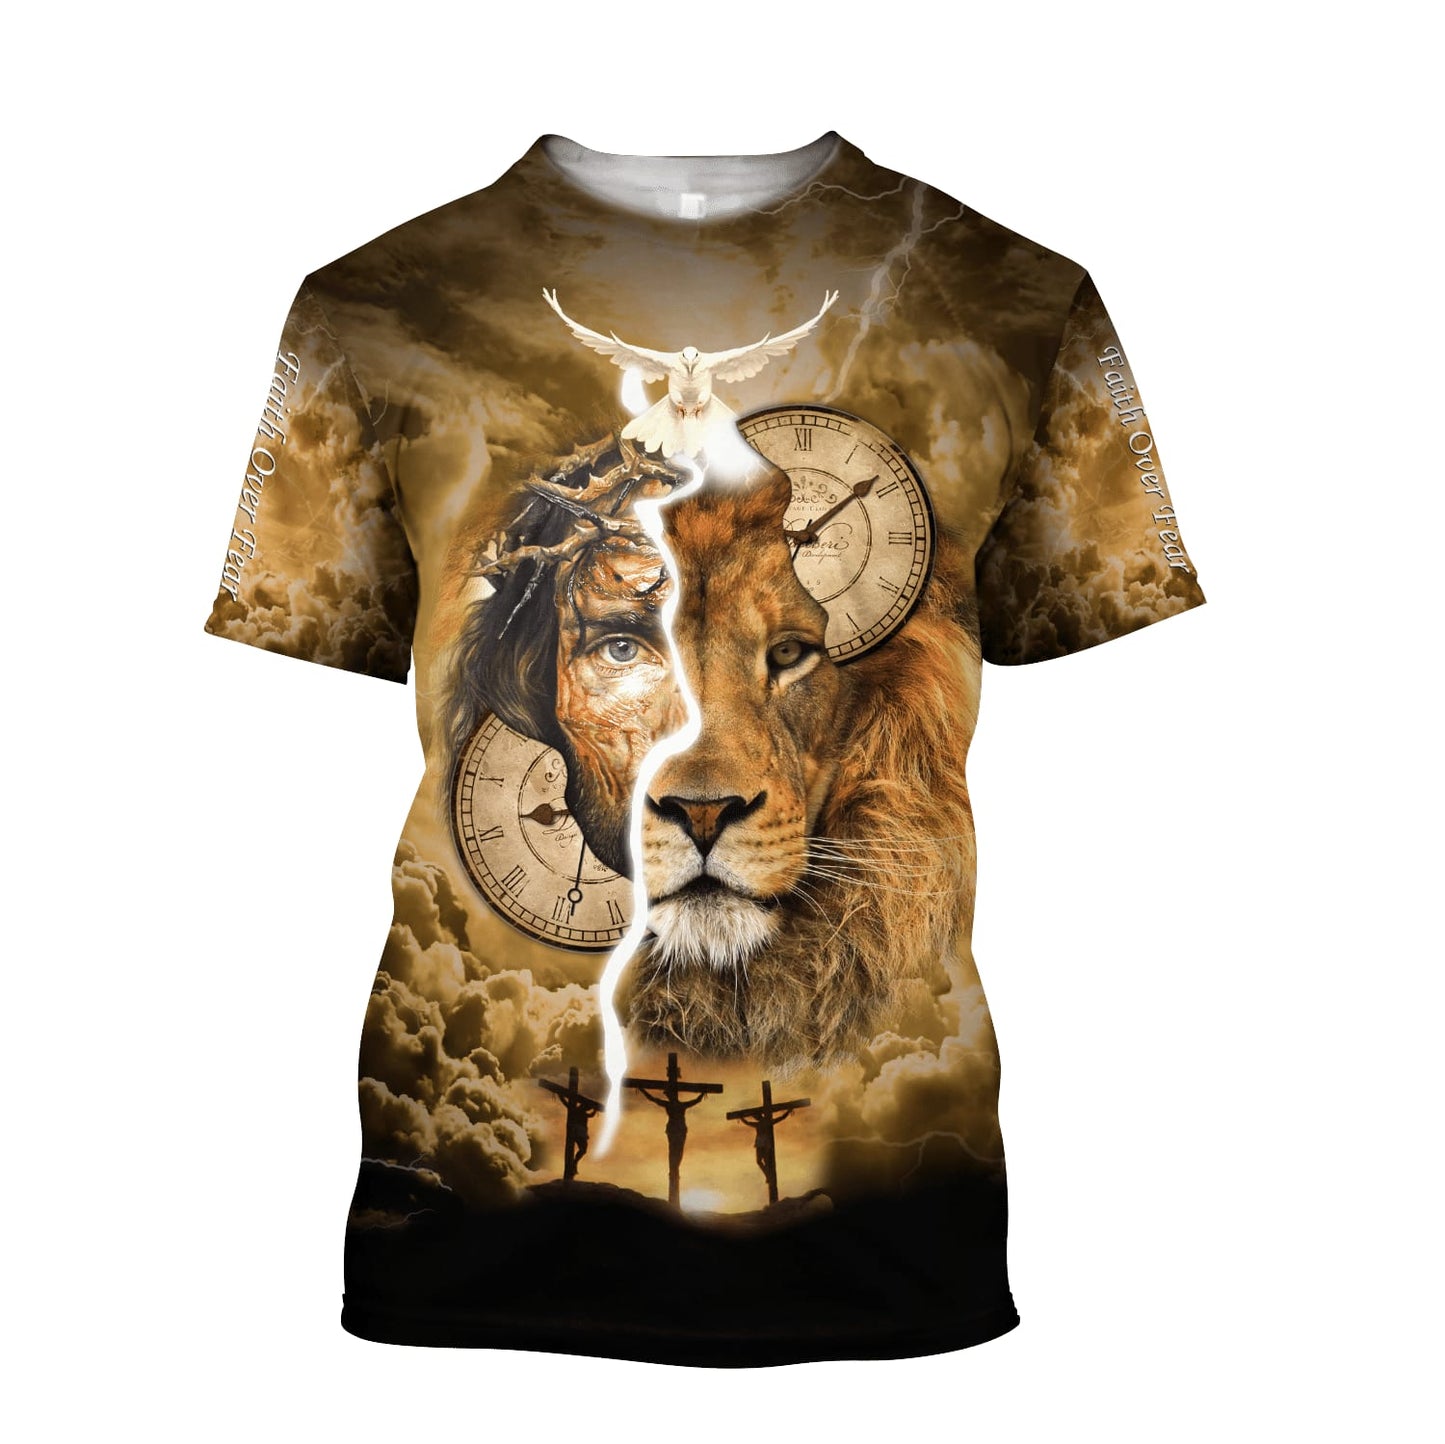 Failth Over Fear Lion Jesus Shirts - Christian 3d Shirts For Men Women